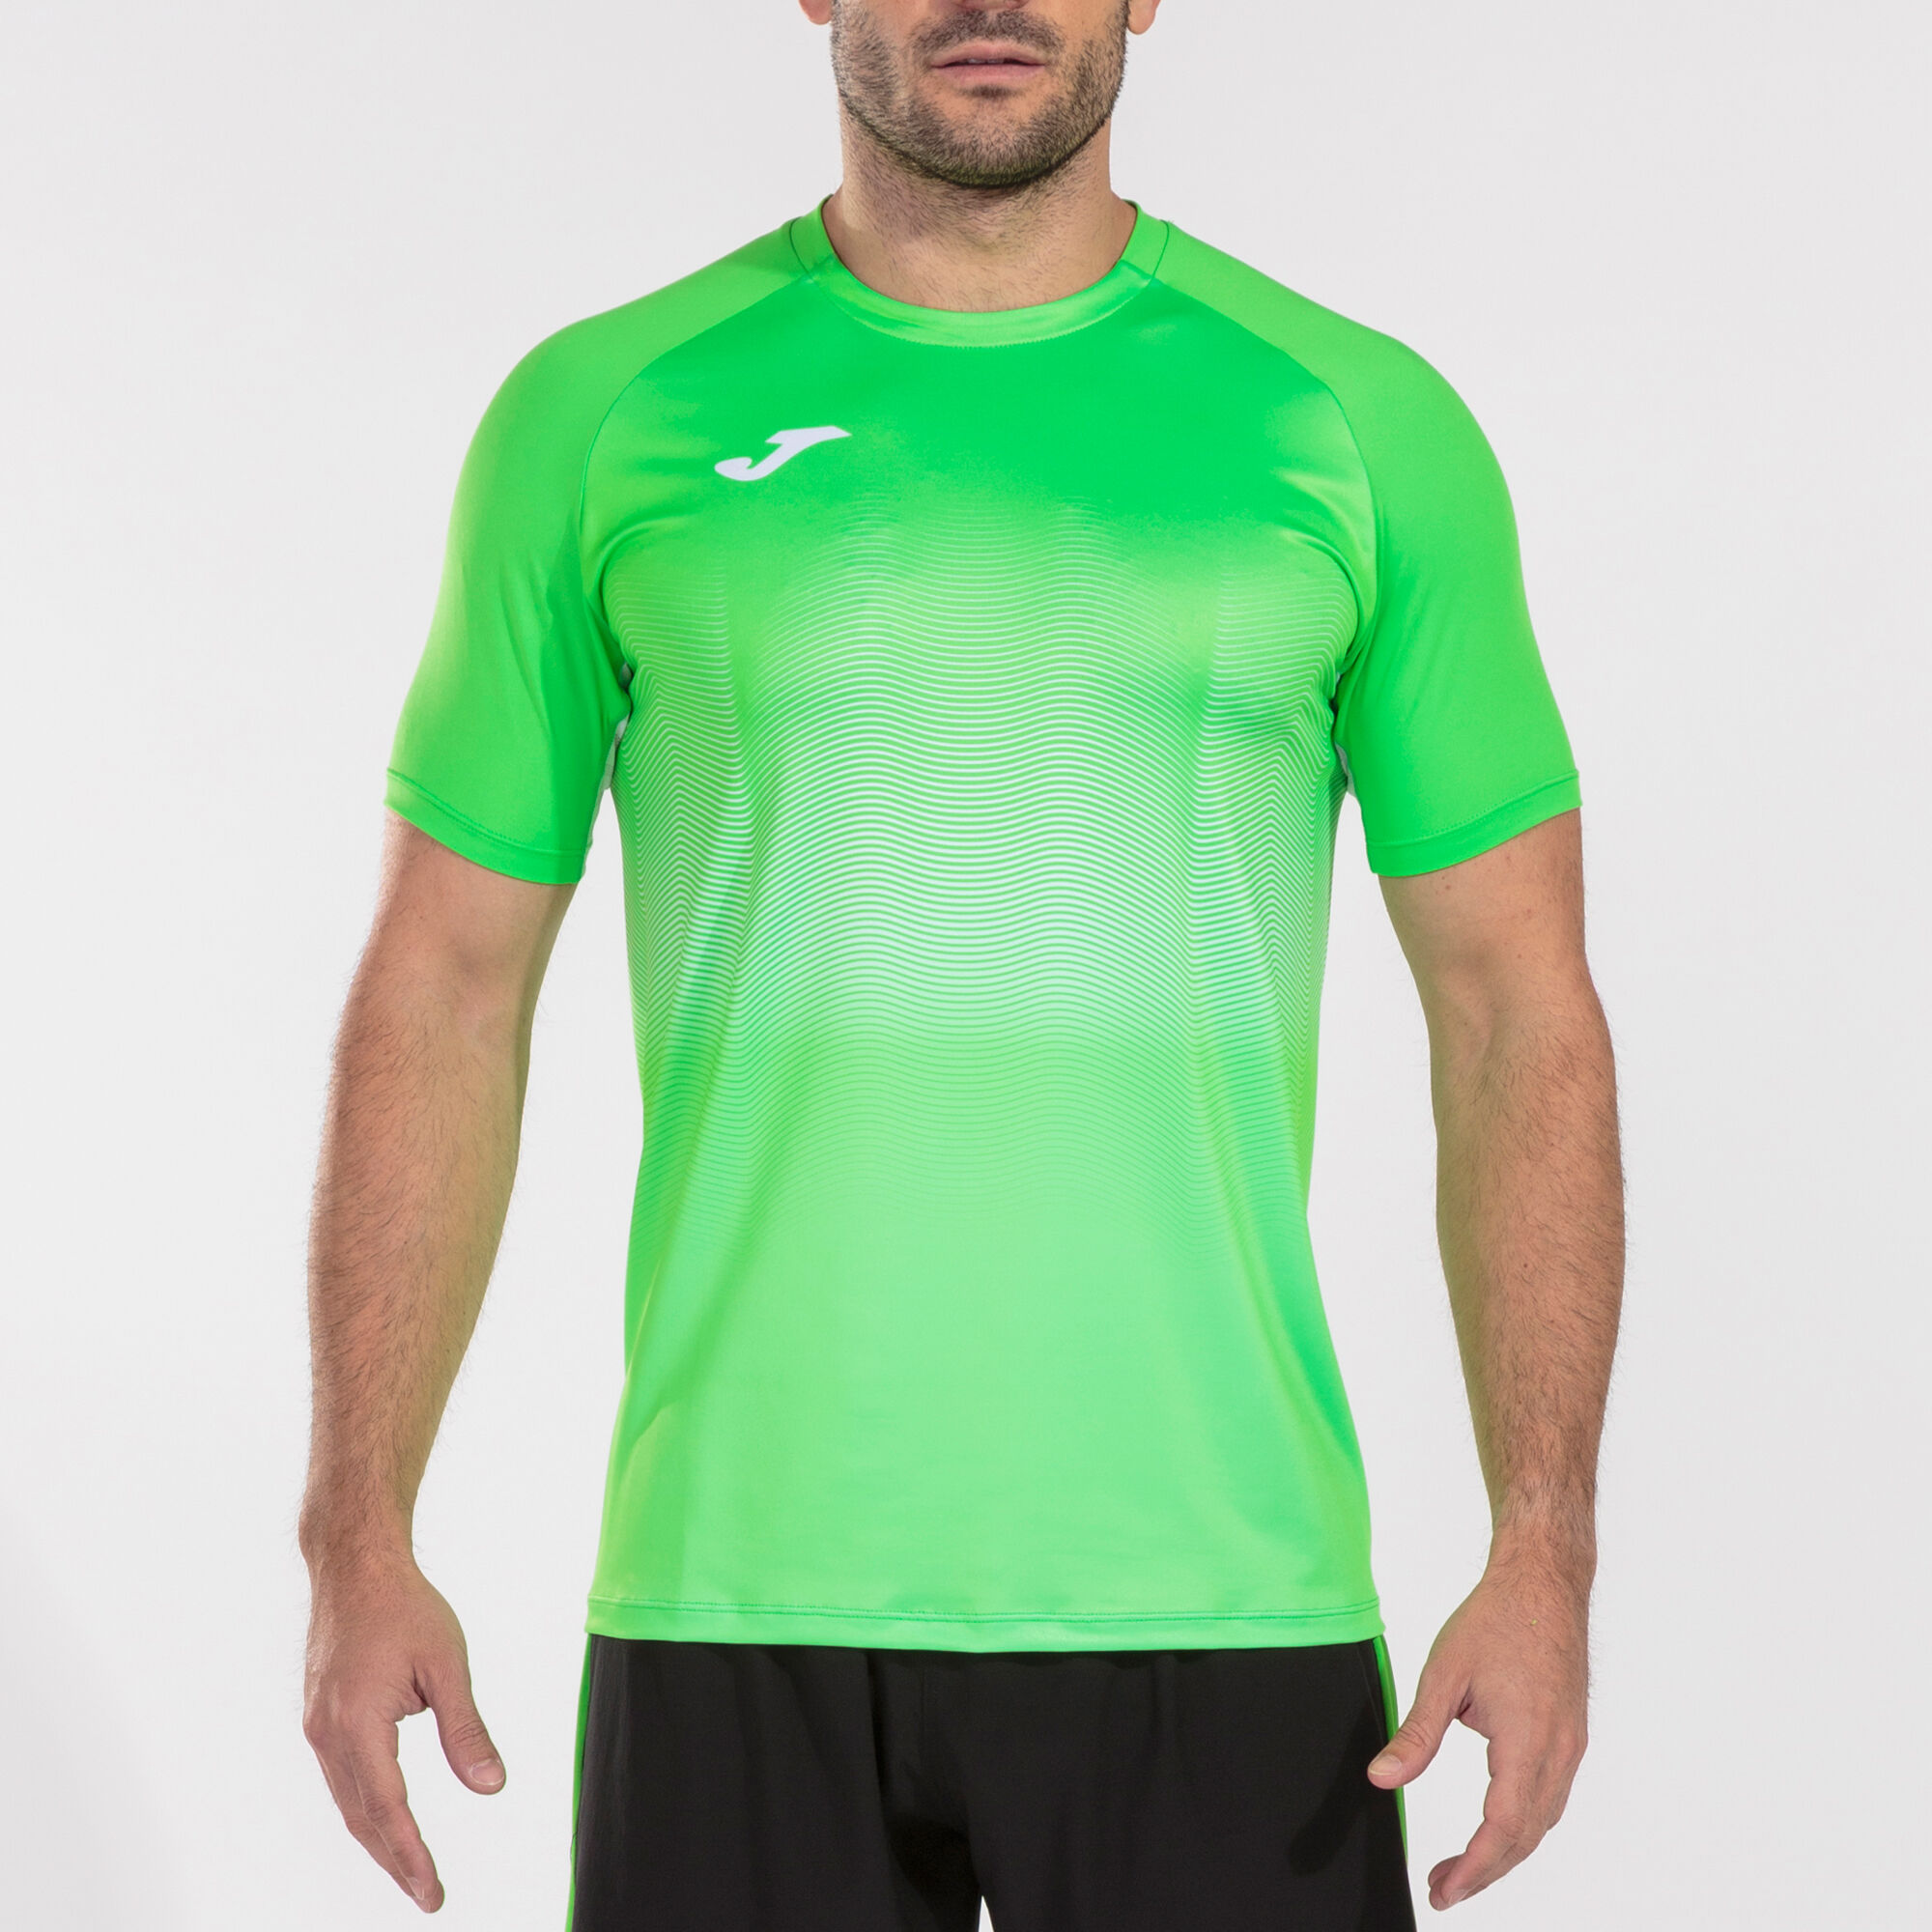 Shirt short sleeve man Elite VII fluorescent green white